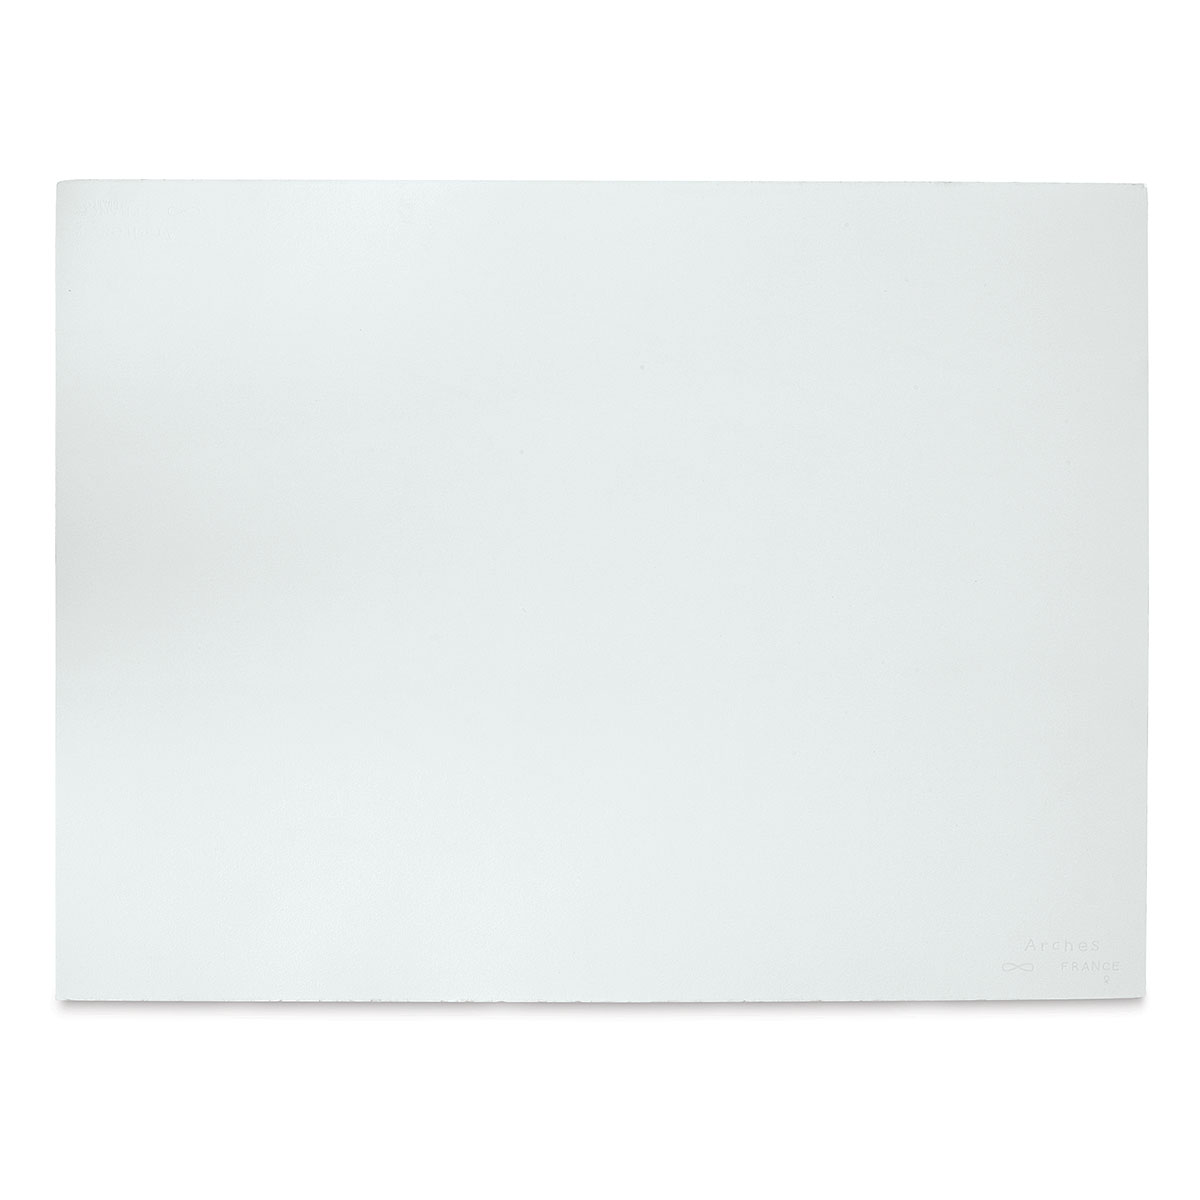 Natural White Watercolor Paper Roll - 140 lb. Hot Press, 44-1/2 x